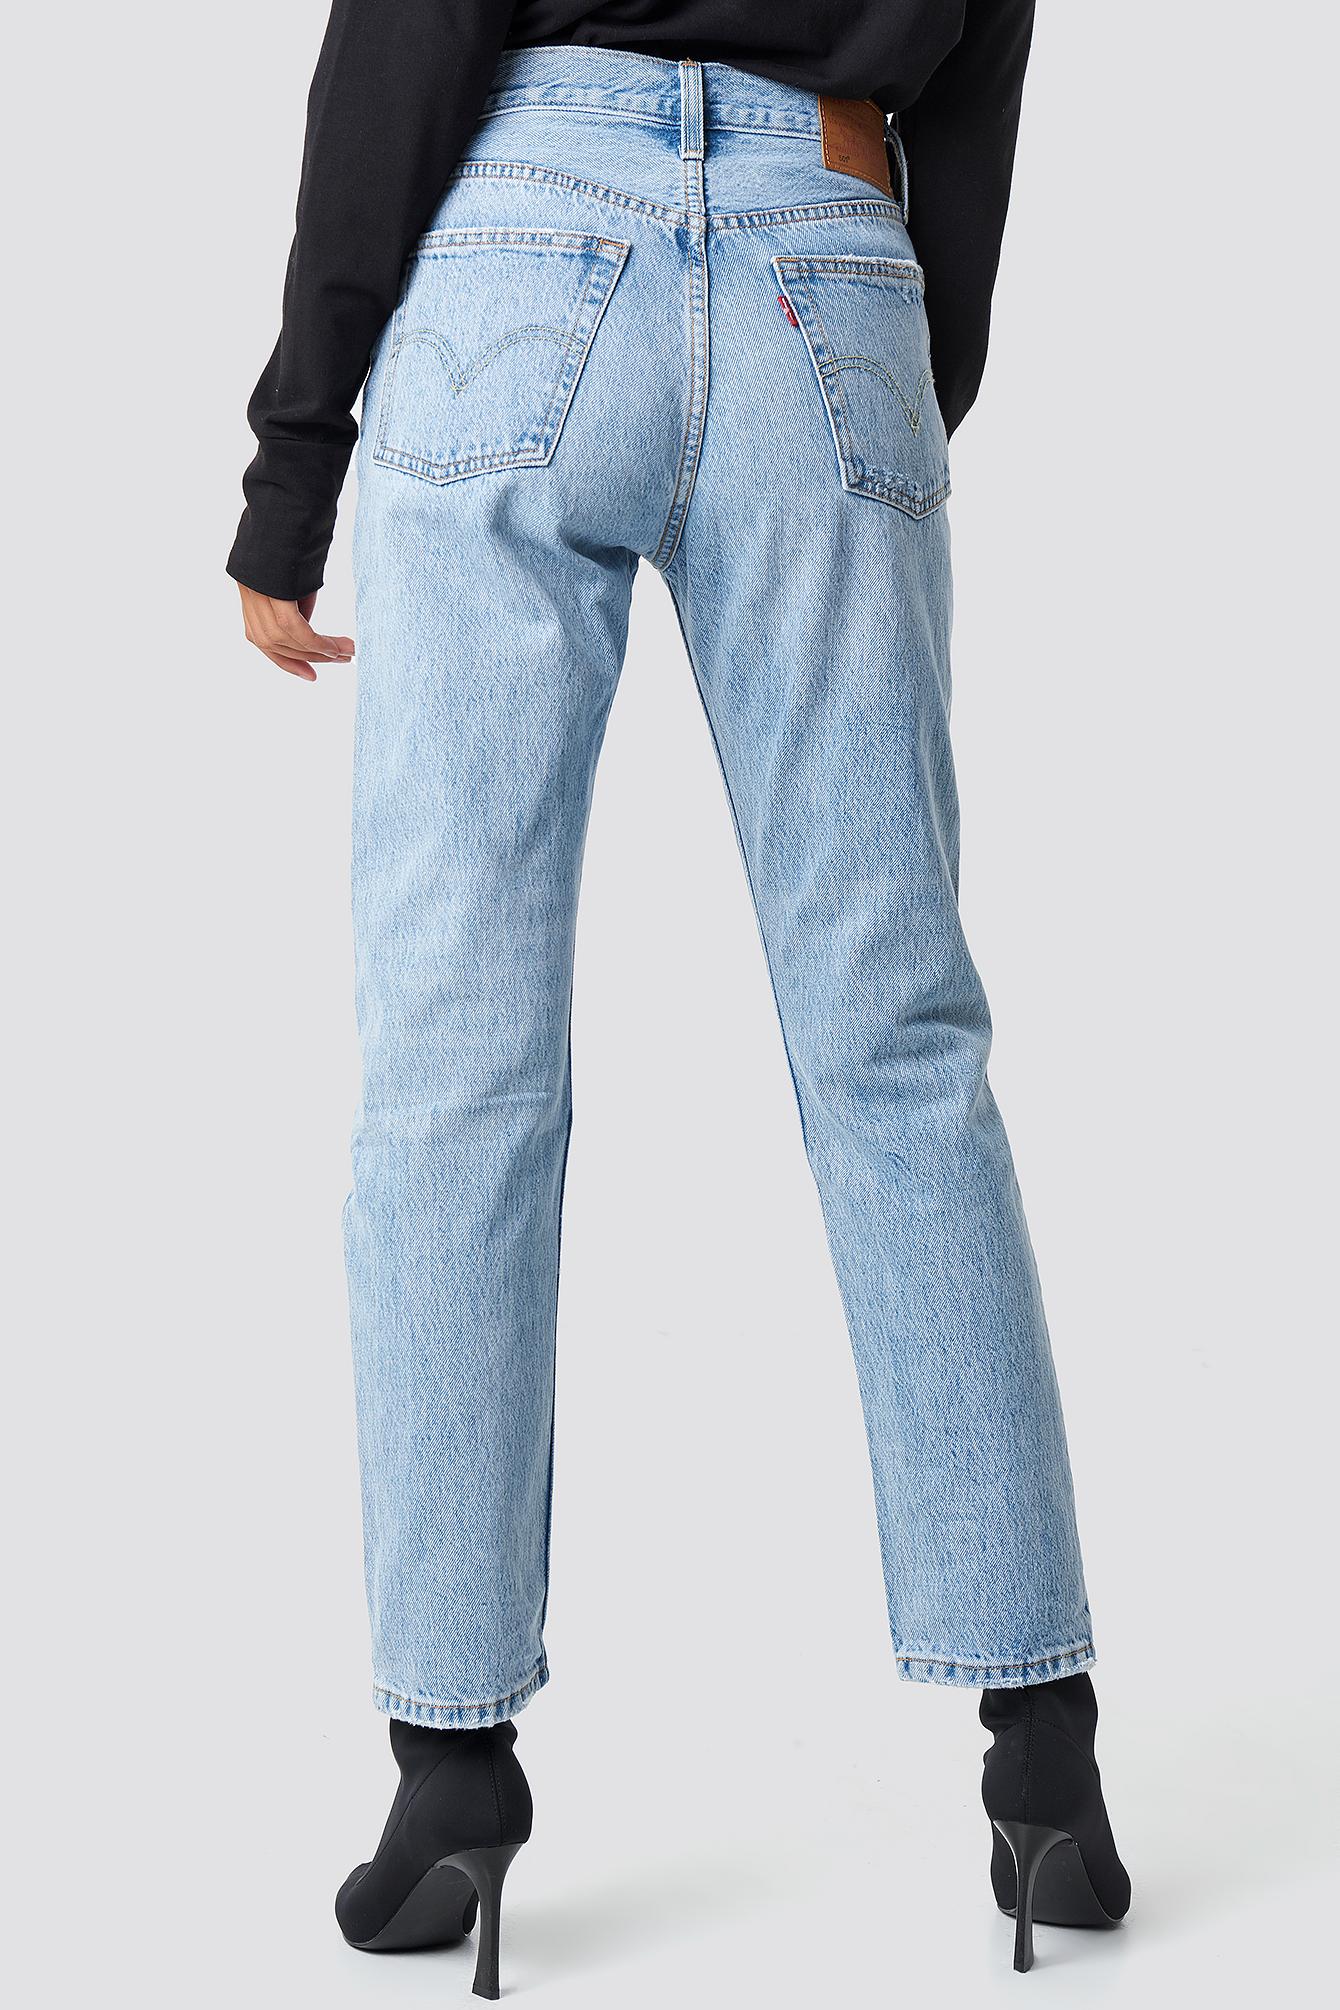 levi's 501 crop jeans lovefool